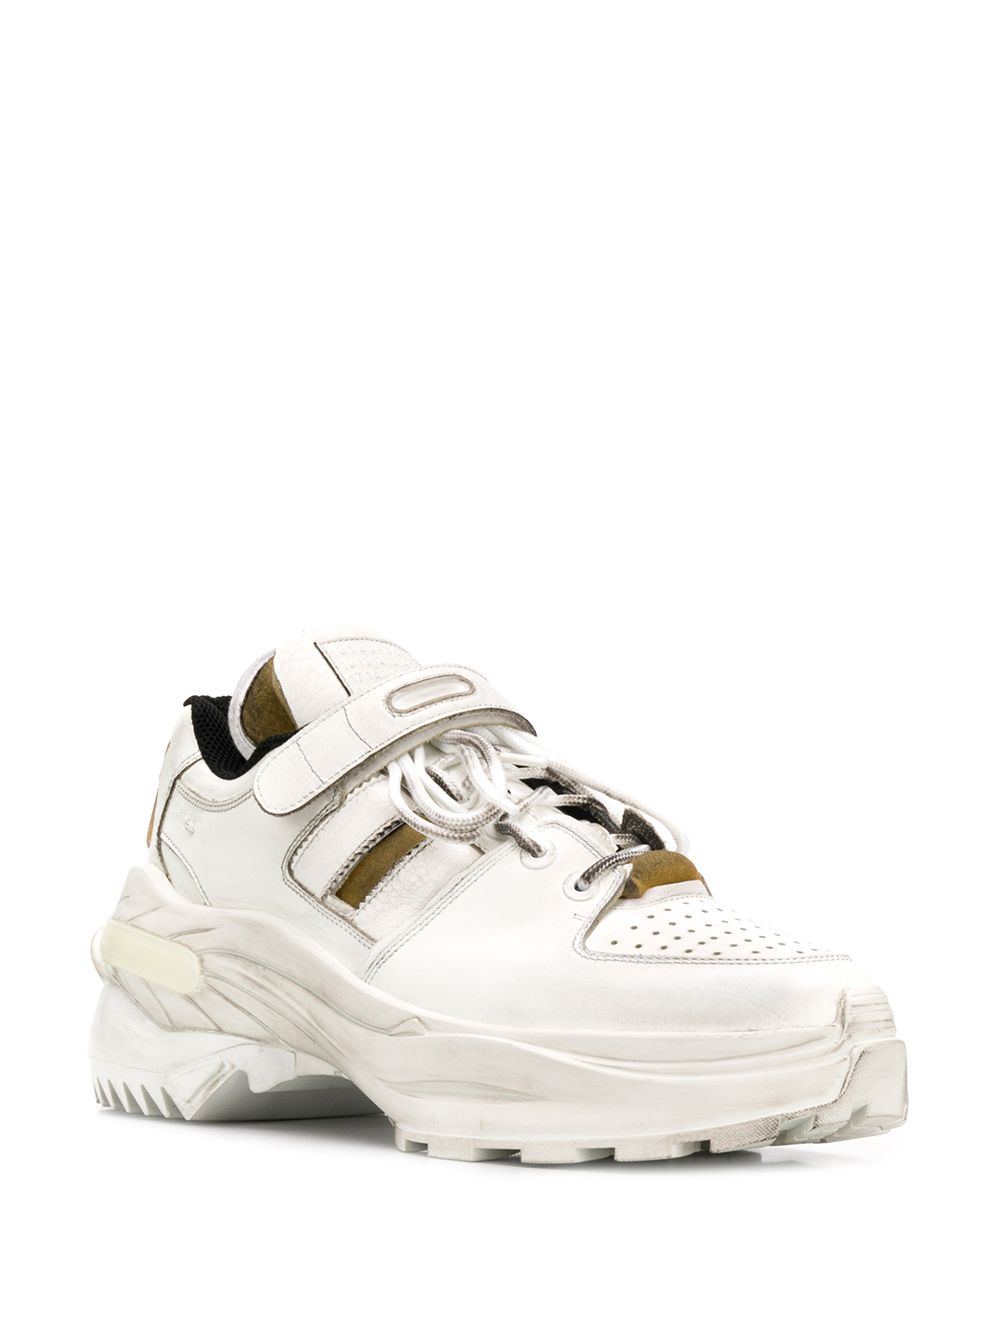 Maison Margiela White Artisanal Leather Low Top Sneakers - Farfetch